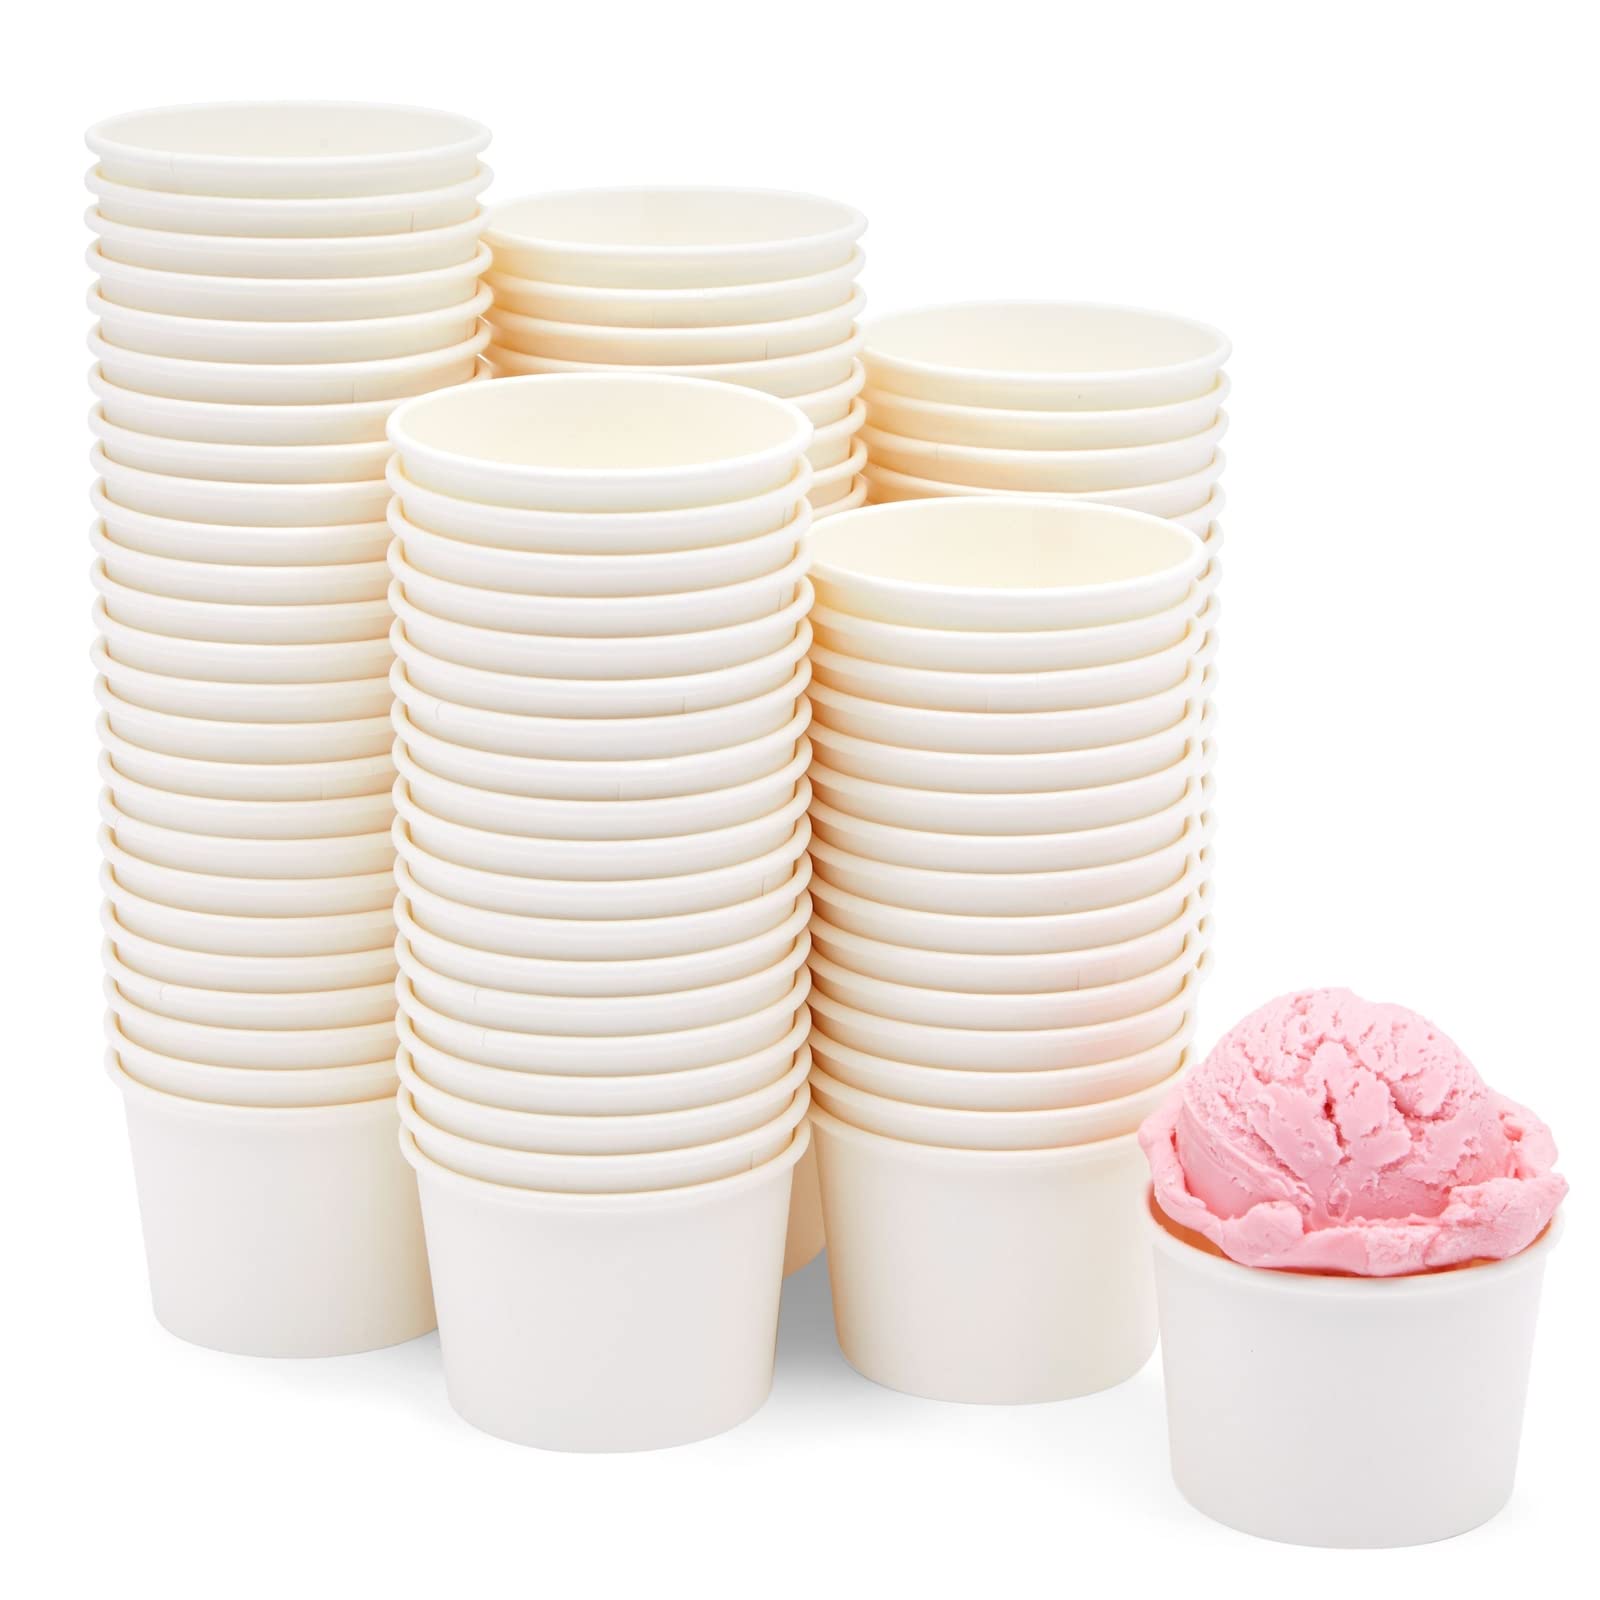 Book Cover Juvale 100-Pack Disposable Paper Ice Cream Cups, 5oz Dessert Bowls for Sundae Bar, Frozen Yogurt (White)